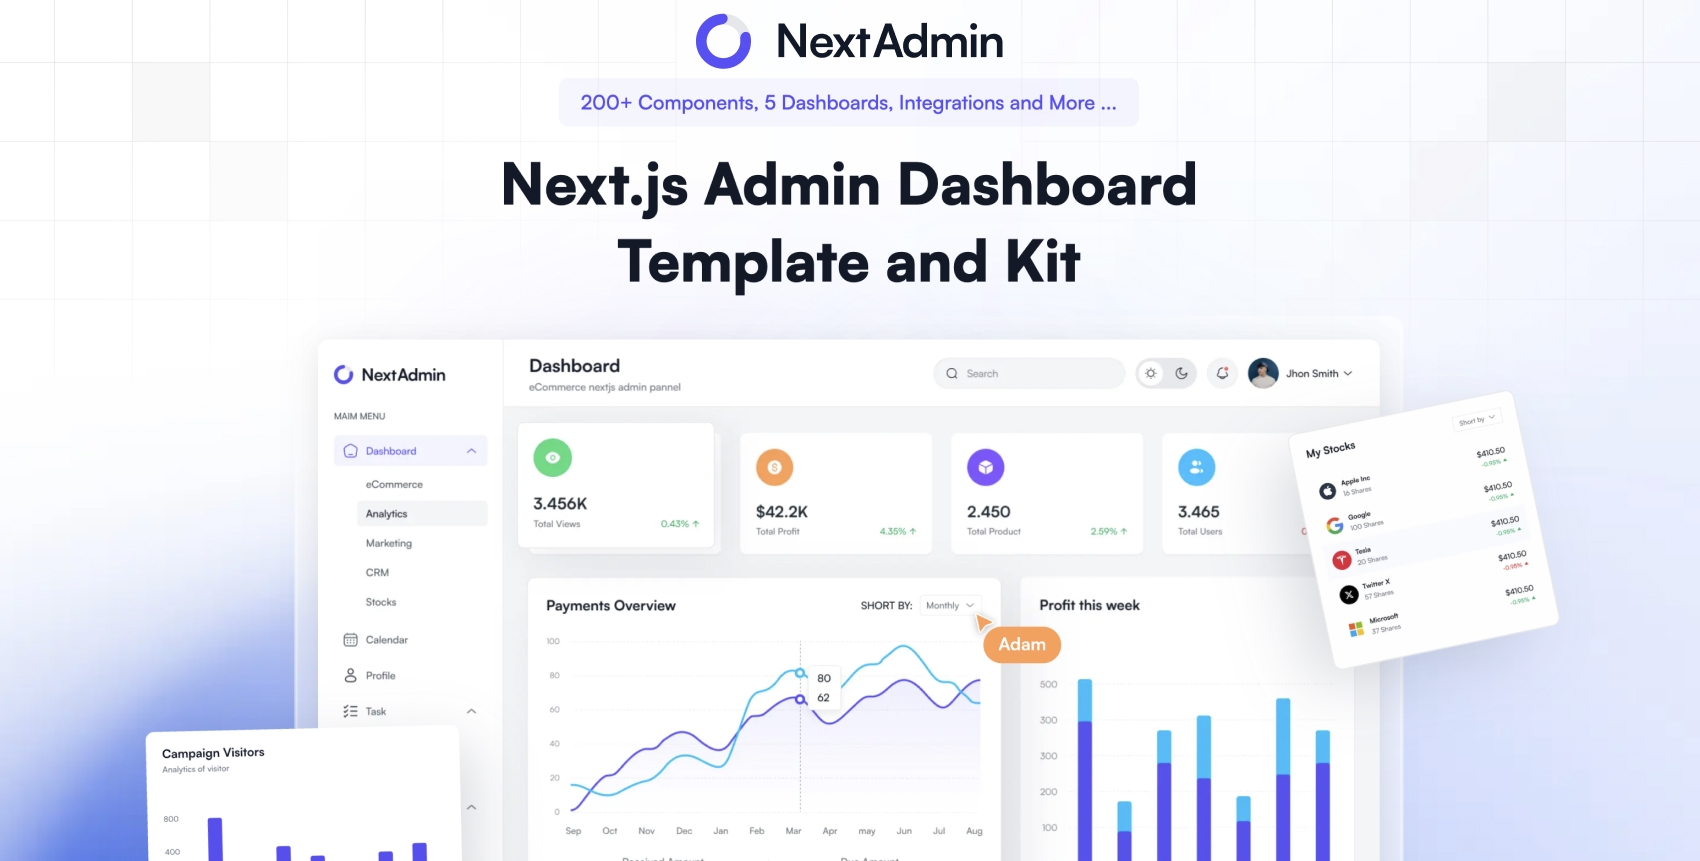 NextAdmin - Next.js Admin Dashboard Template and Toolkit